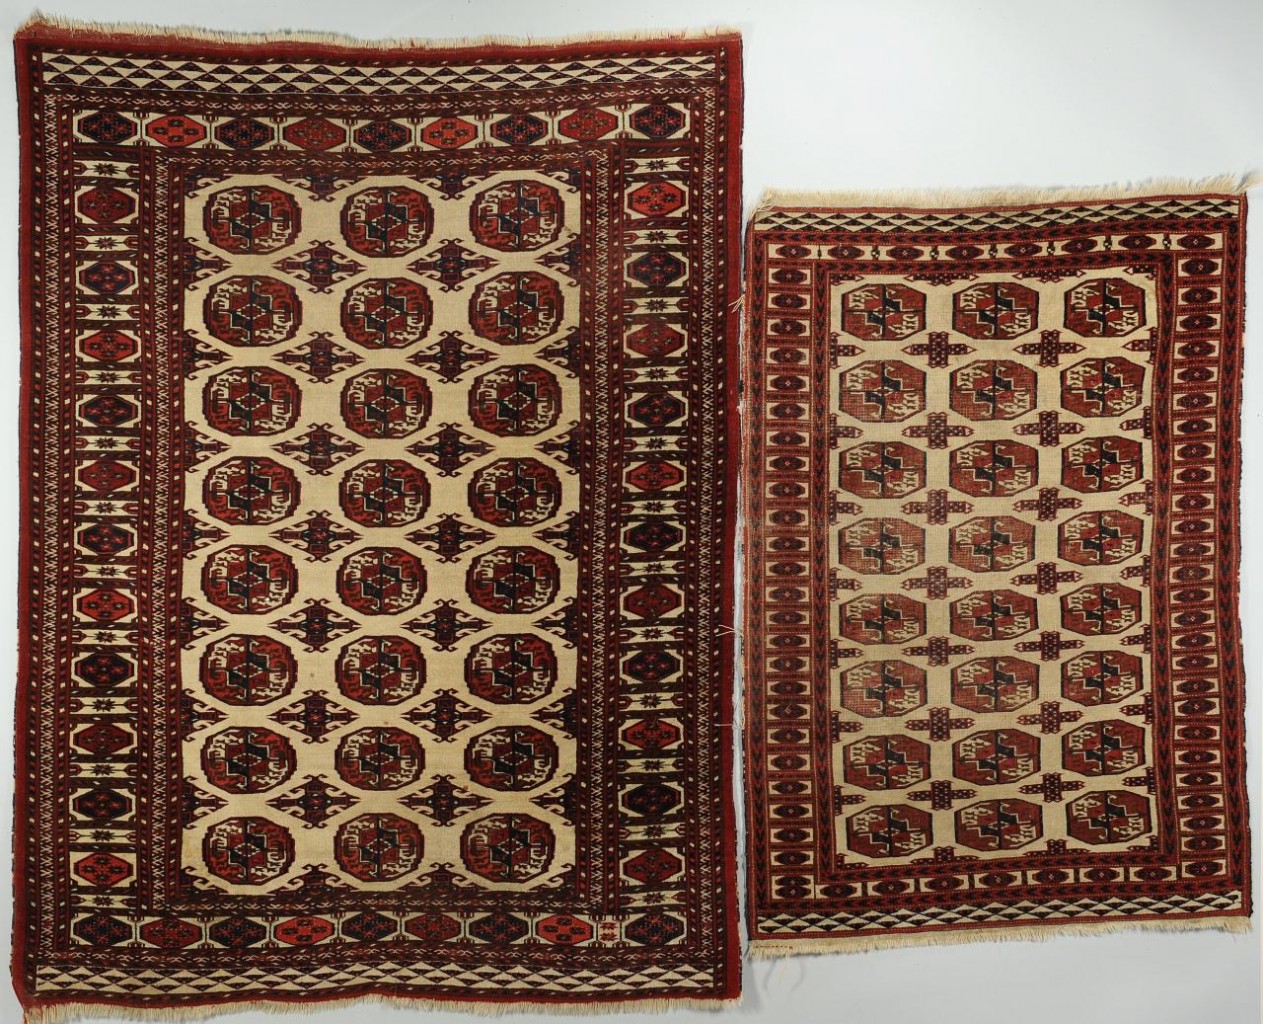 Lot 702: 2 Persian Turkoman Rugs, 6'6" x 5' and 5'3" x 3'5"